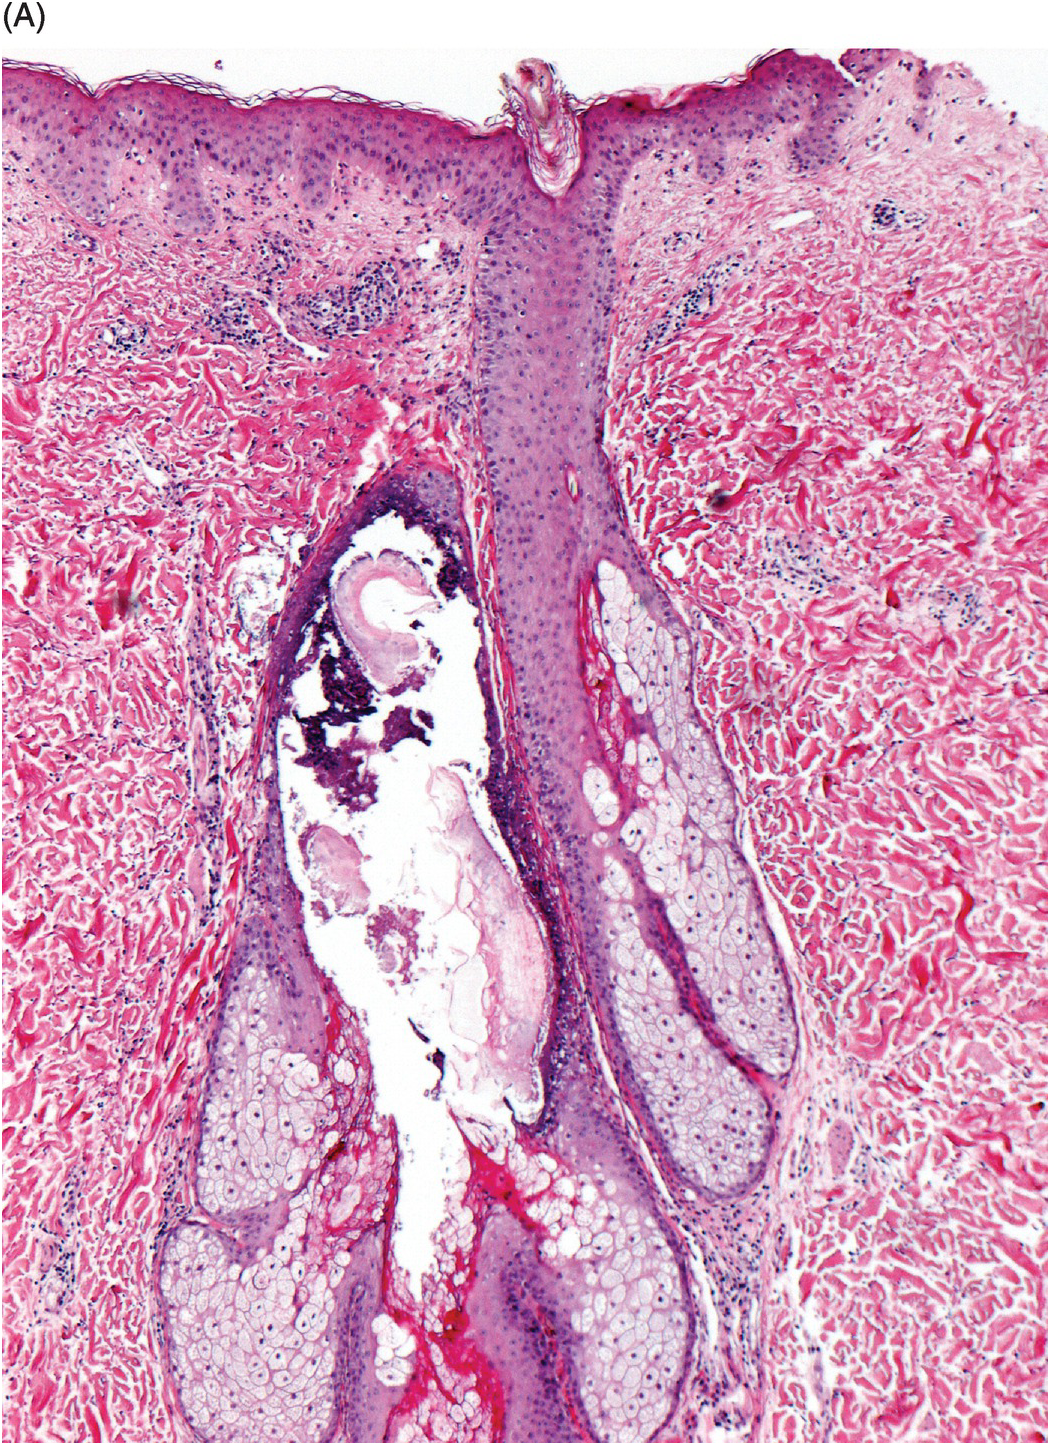 tufted folliculitis histology